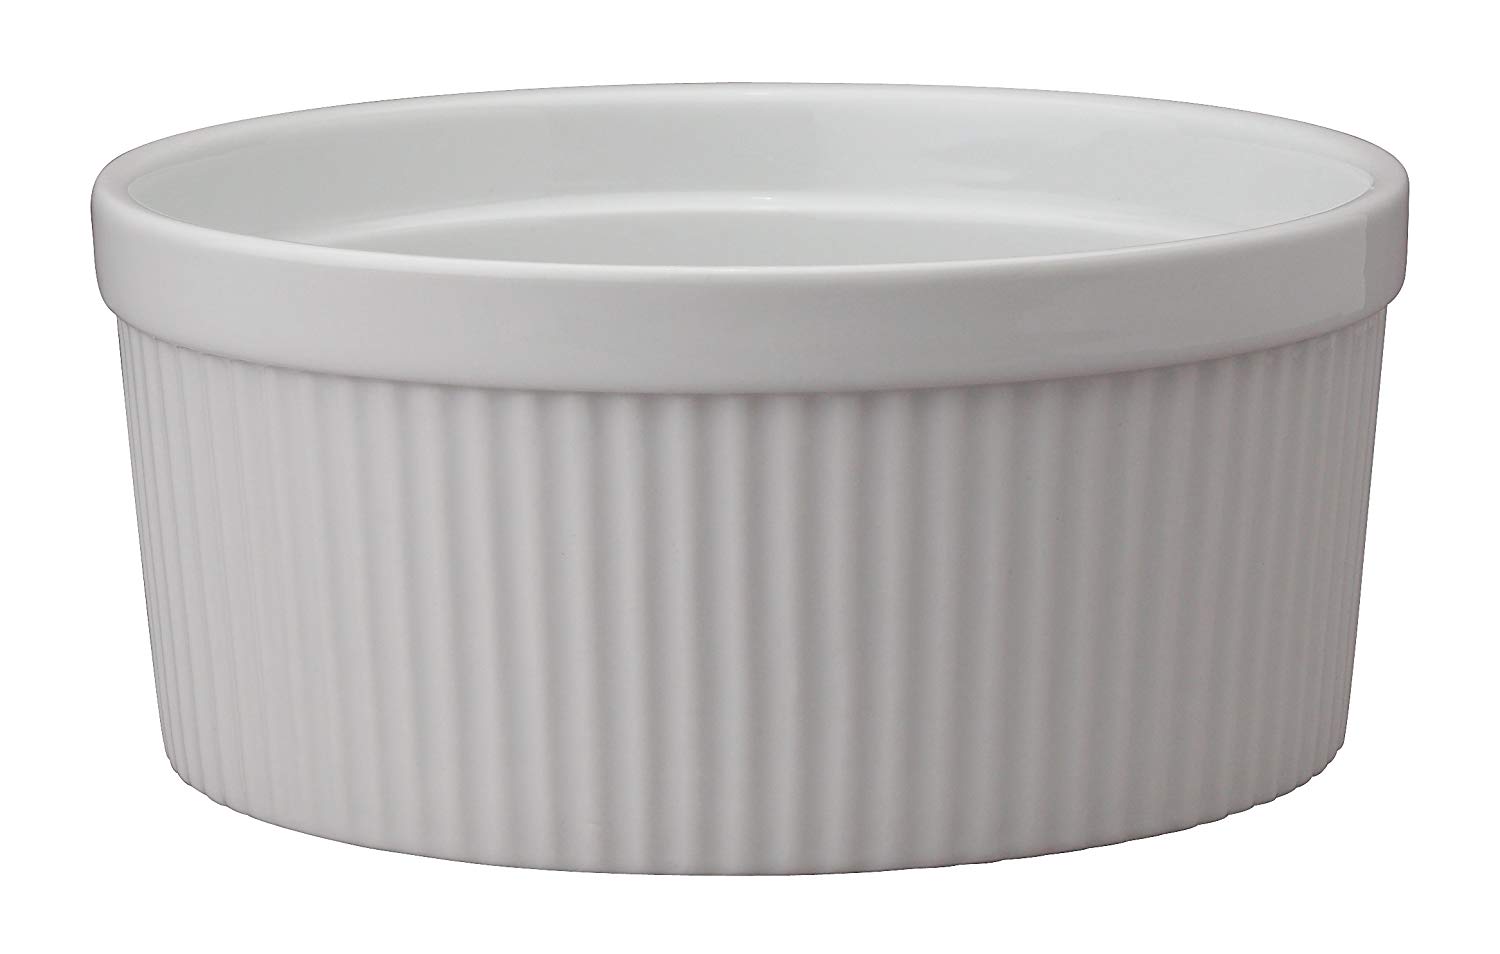 HIC Harold Import Co. Ramekin Porcelain Souffle Dish, 1.5-Quart